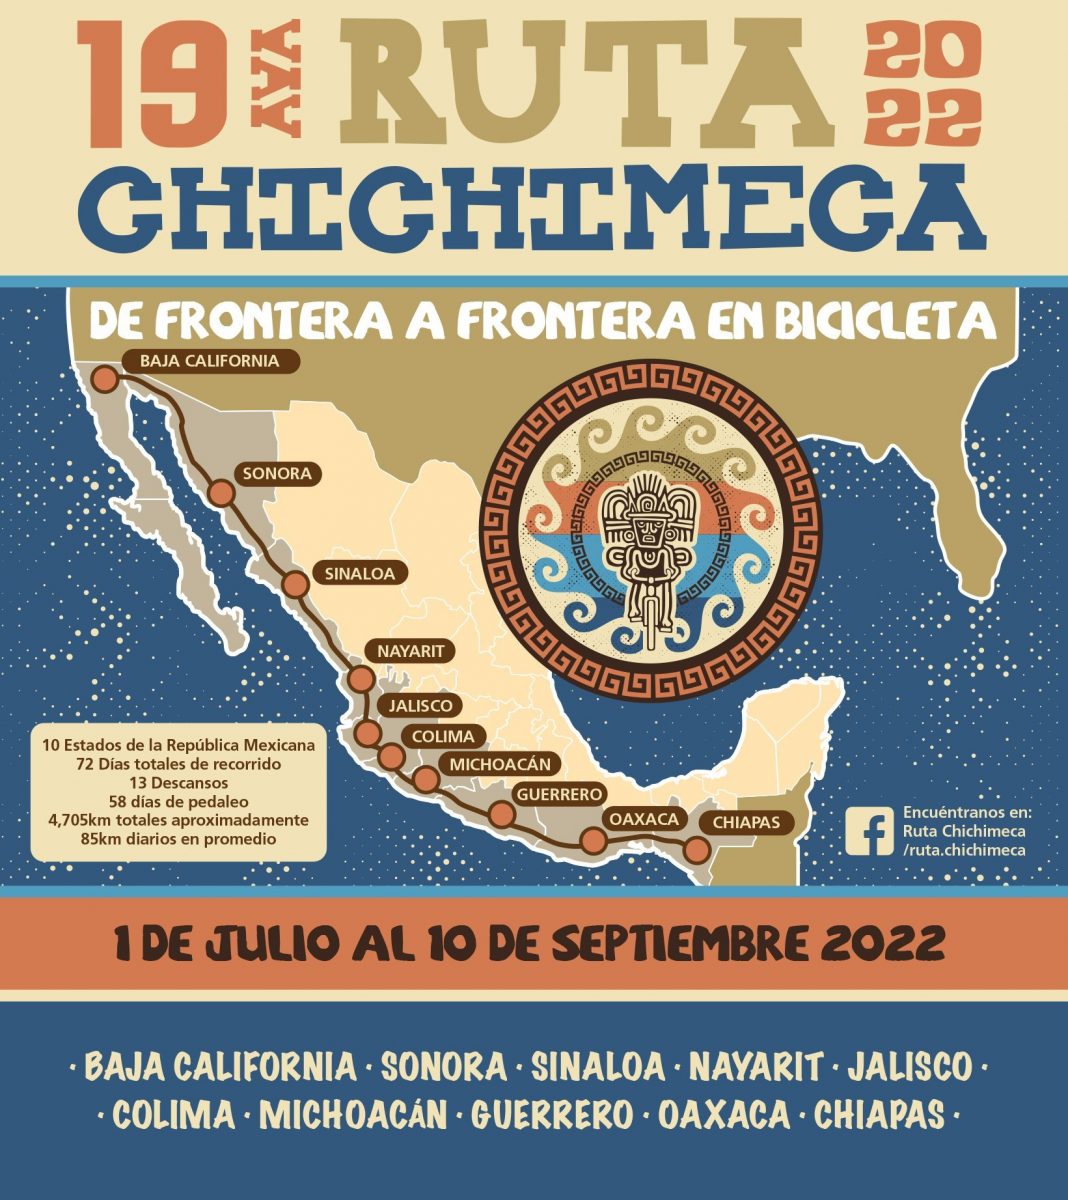 ruta-chichimeca-2022-1068x1200 “Ruta Chichimeca 2022” border-to-border bicycle trek stops over in Puerto Peñasco